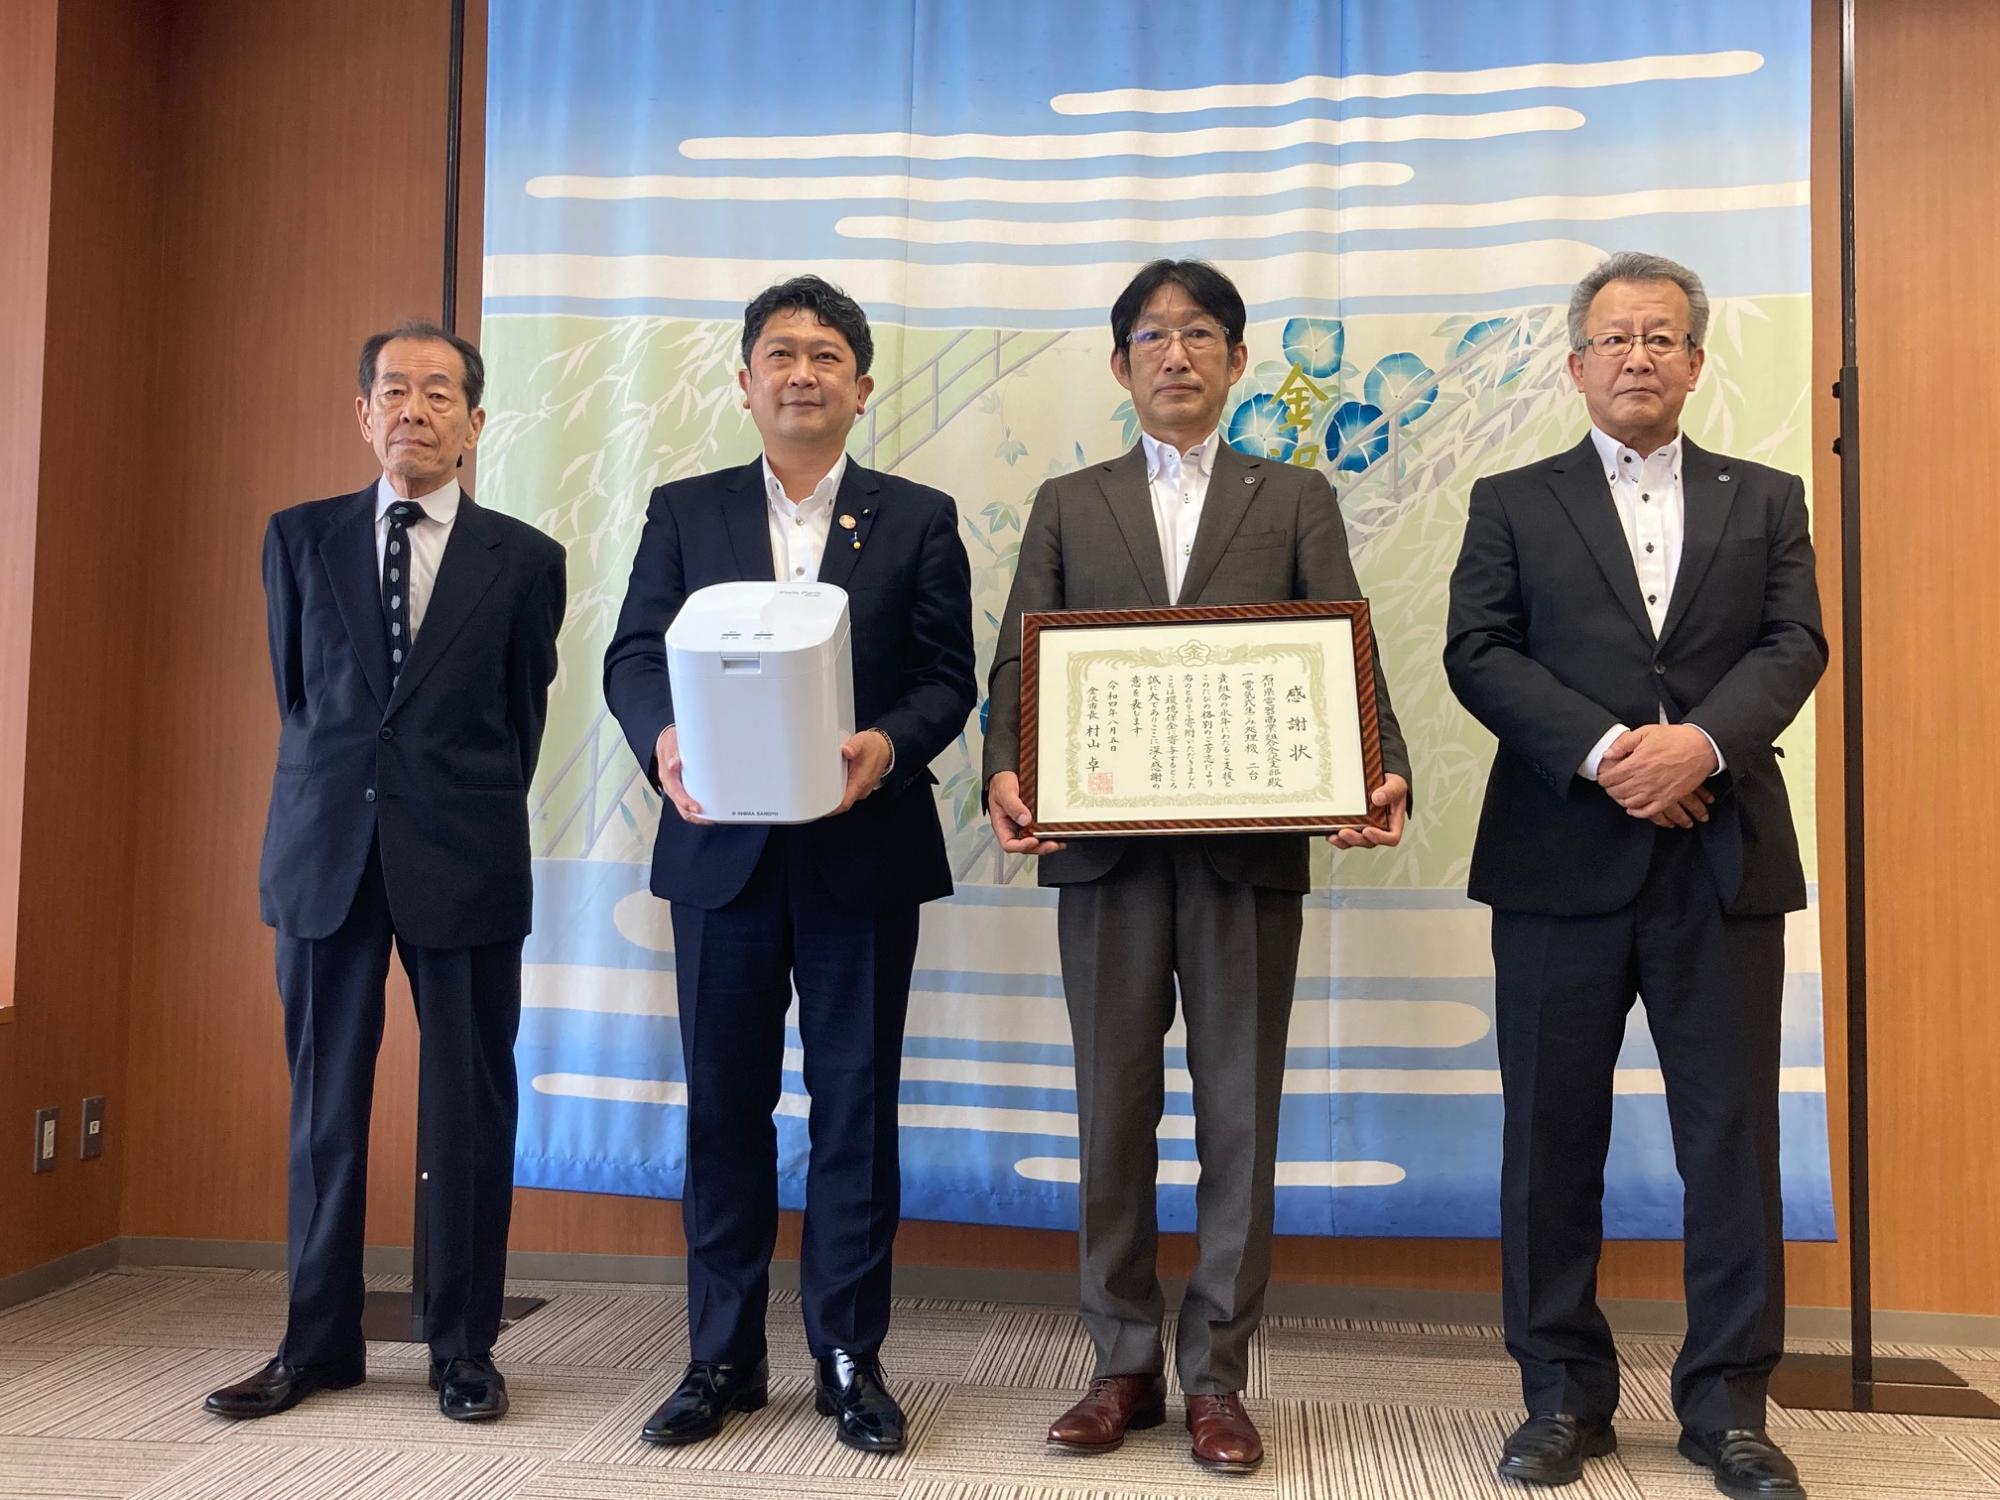 石川県電器商業組合金沢支部への寄附感謝状贈呈式の様子